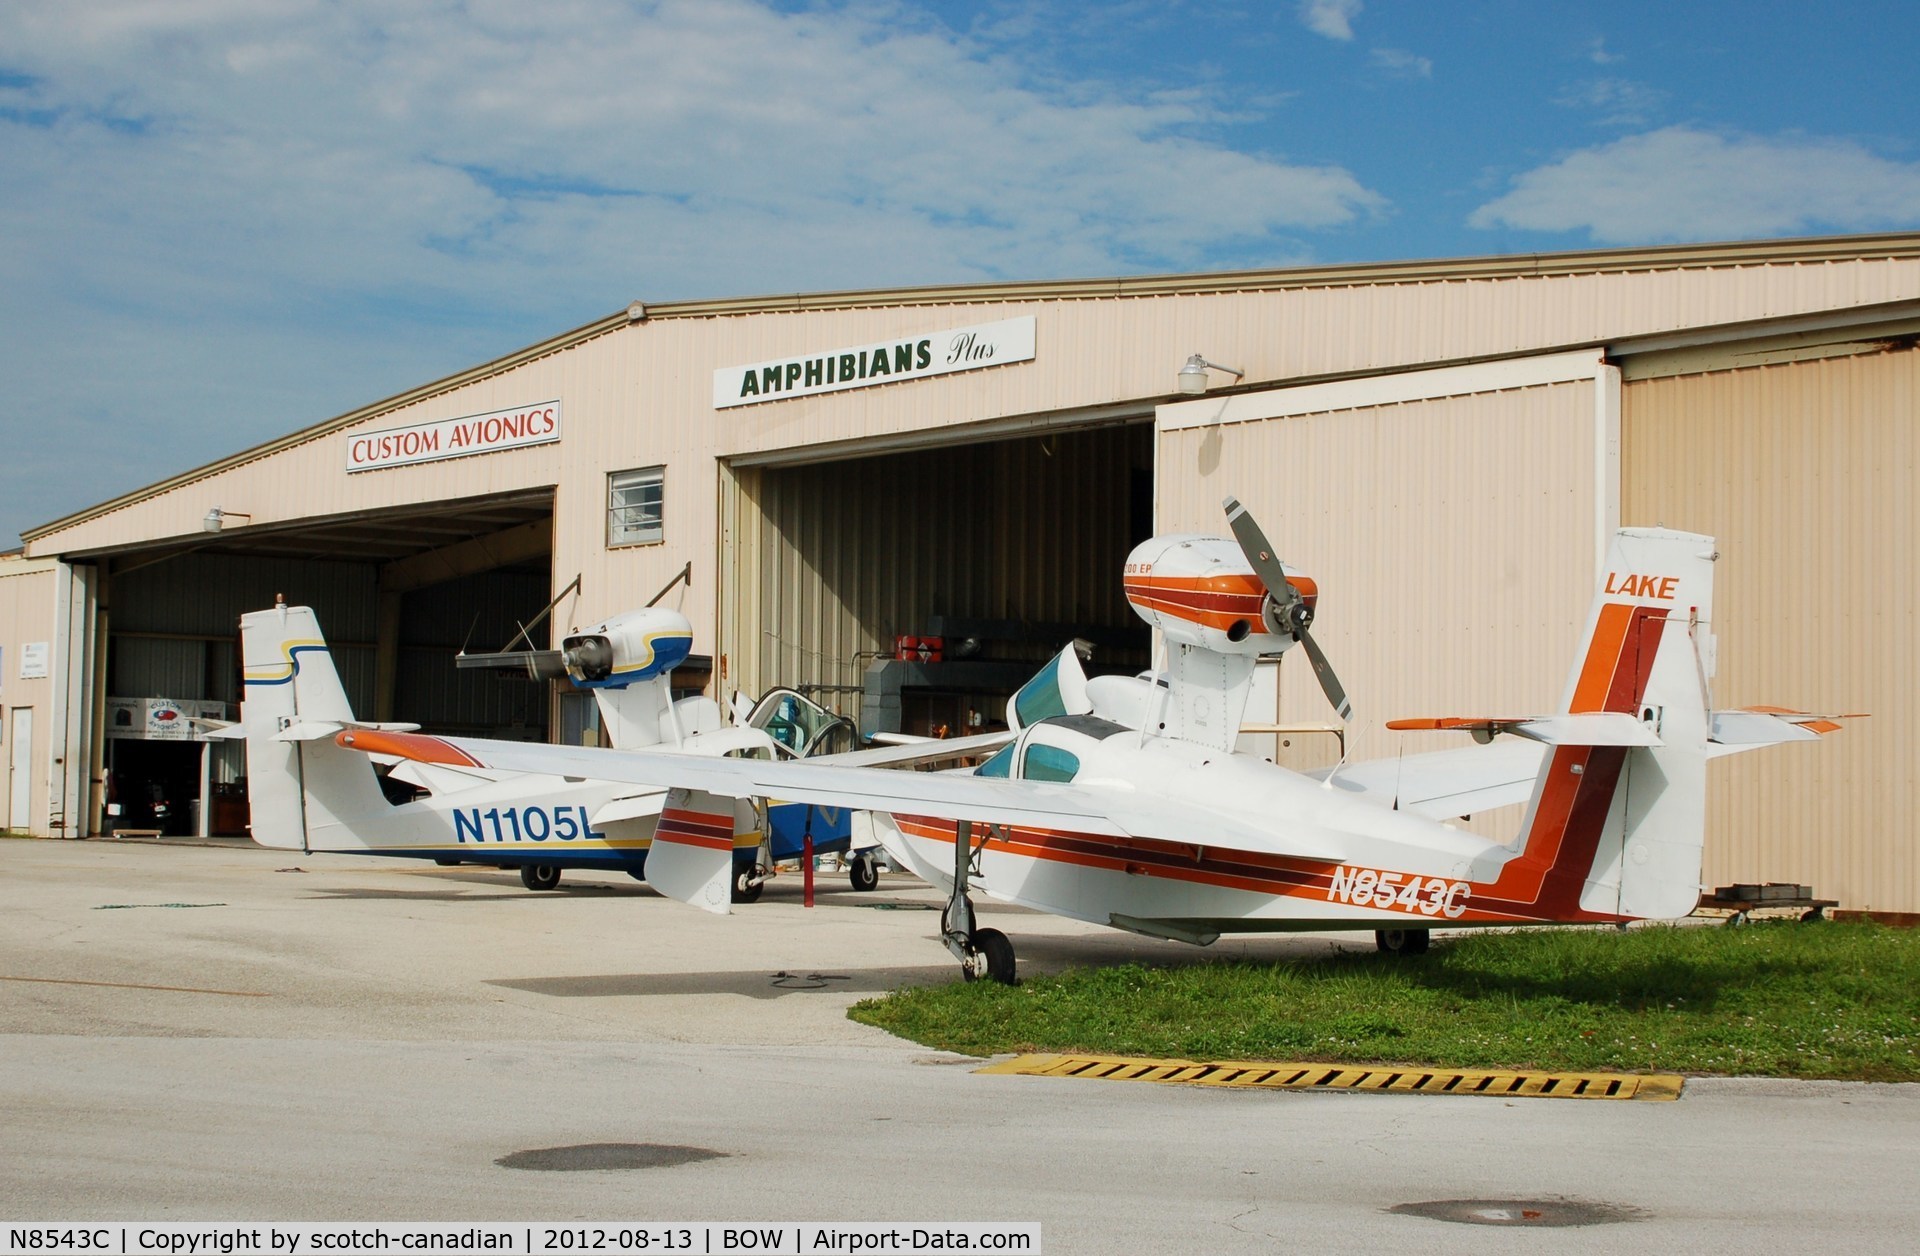 N8543C, 1984 Lake LA-4-200 Buccaneer C/N 1103, 1984 Consolidated Aeronautics Inc. LAKE LA-4-200 N8543C at Bartow Municipal Airport, Bartow, FL